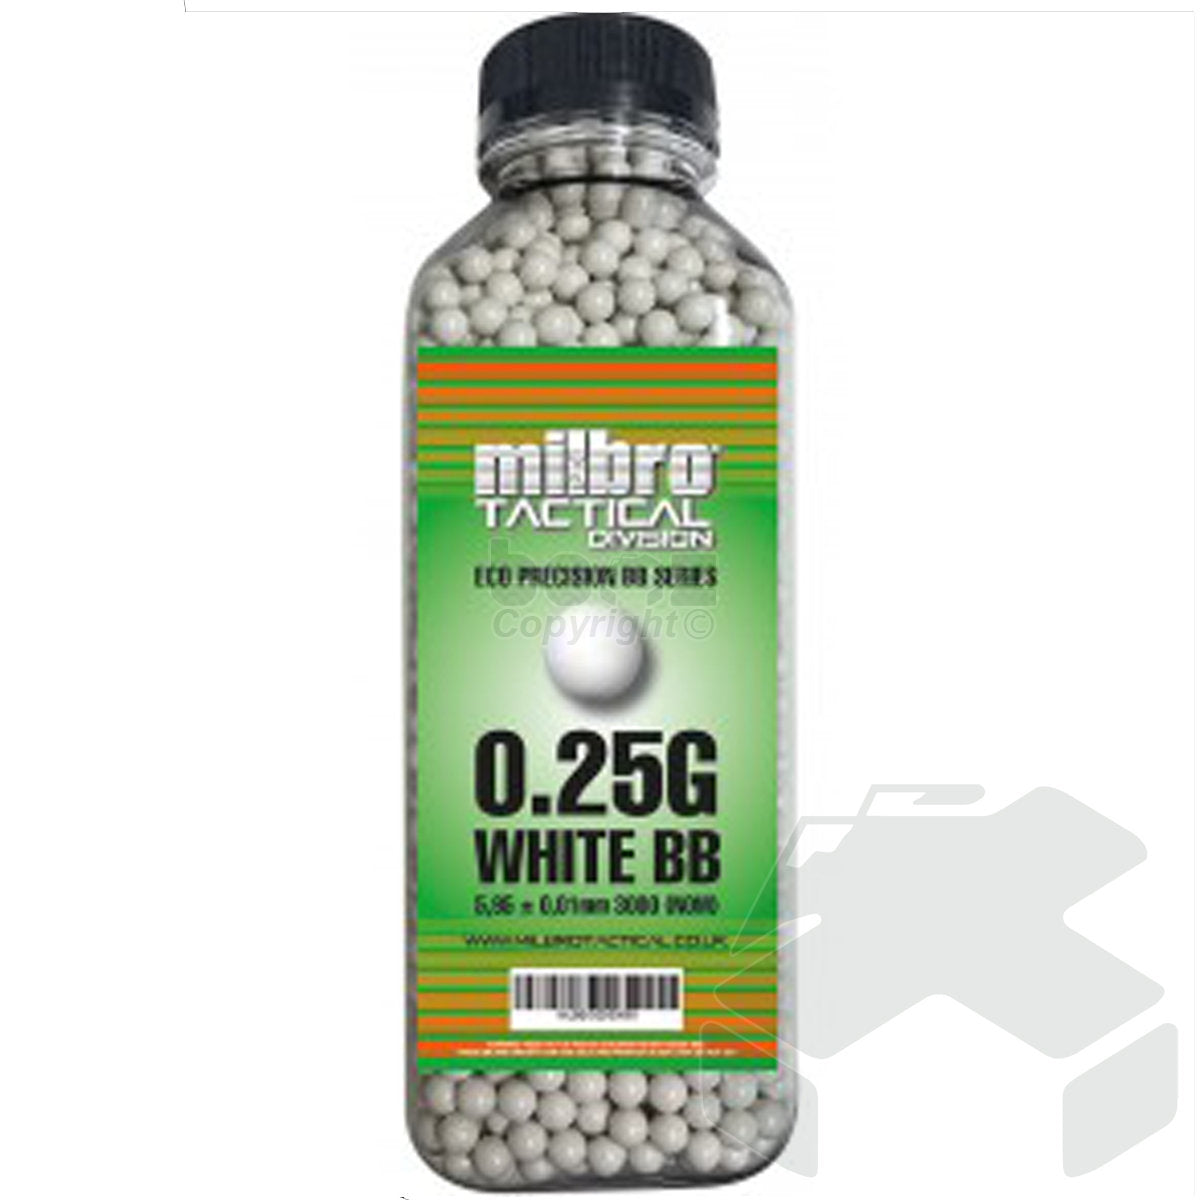 Milbro Tactical Division 0.25G 6mm Bio BB 3000 Pcs Bottle - White